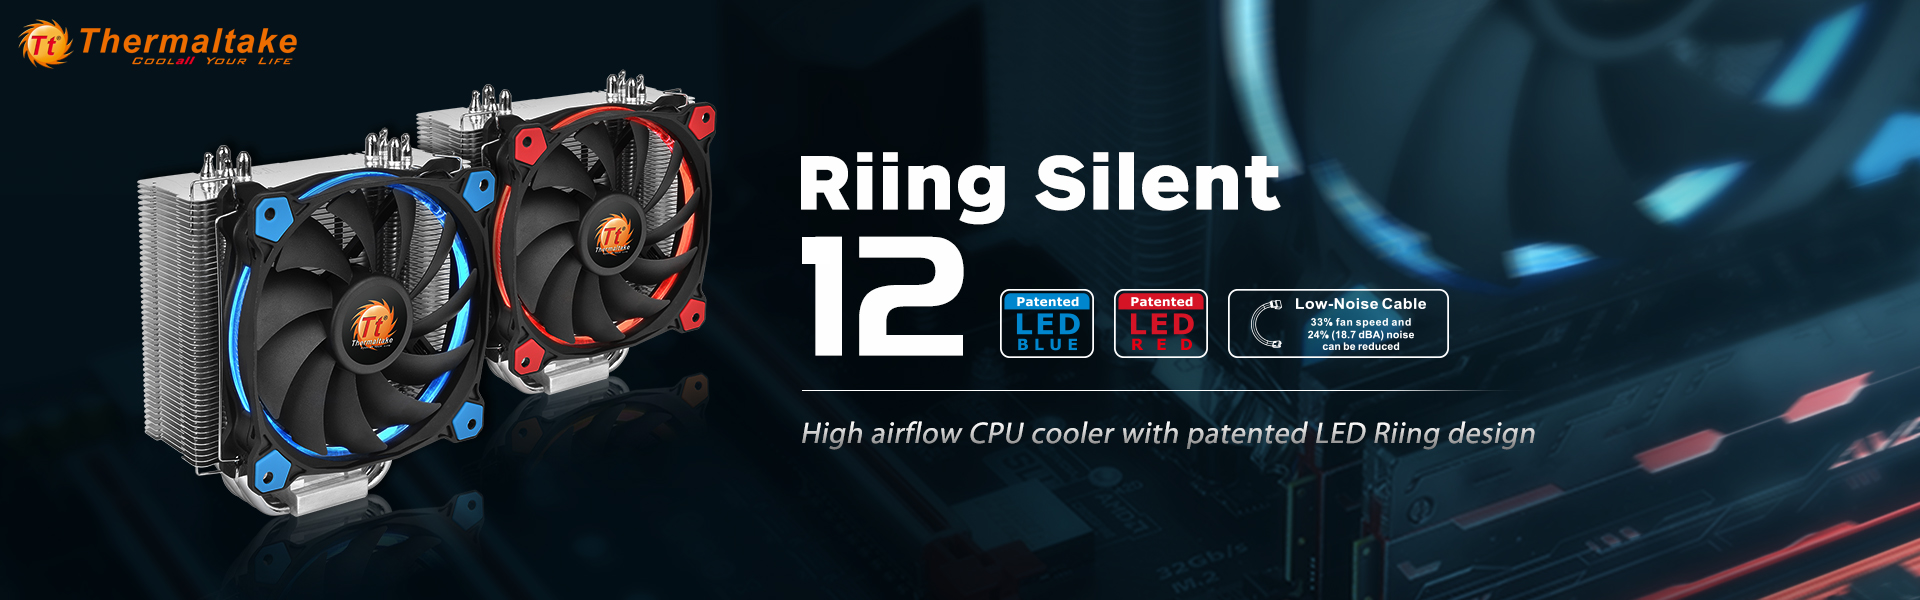 Thermaltake Riing Silent 12 CPU Cooler Series